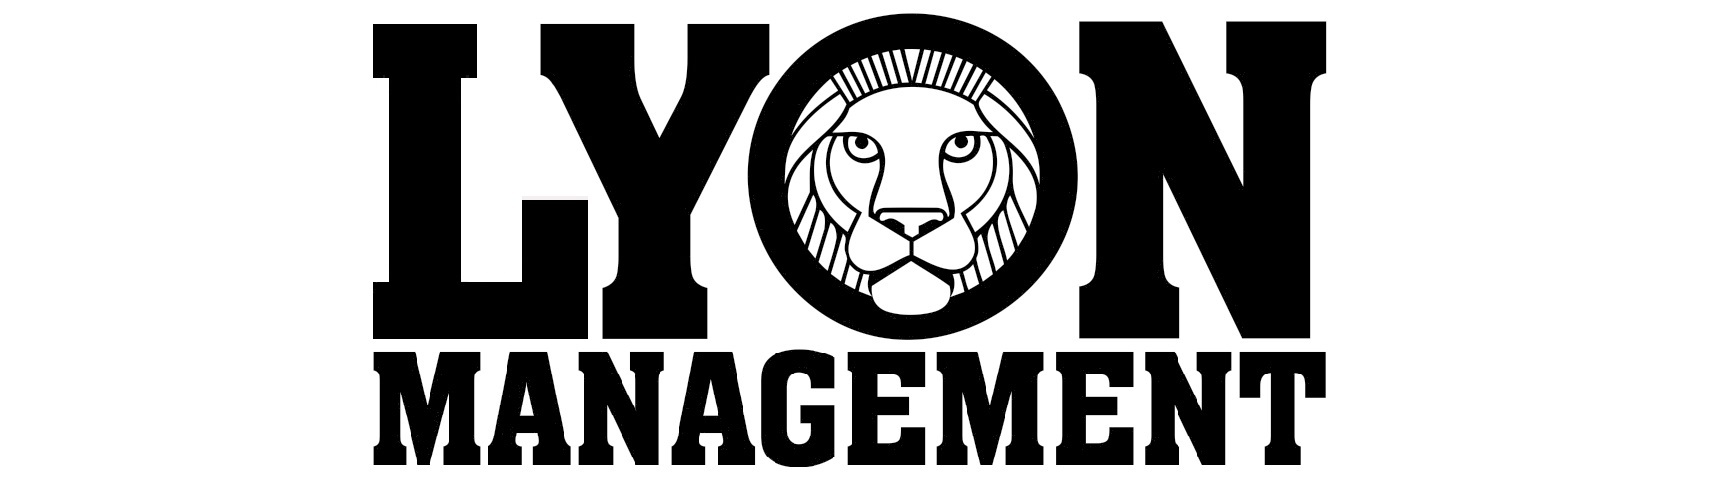 Lyon Management Company